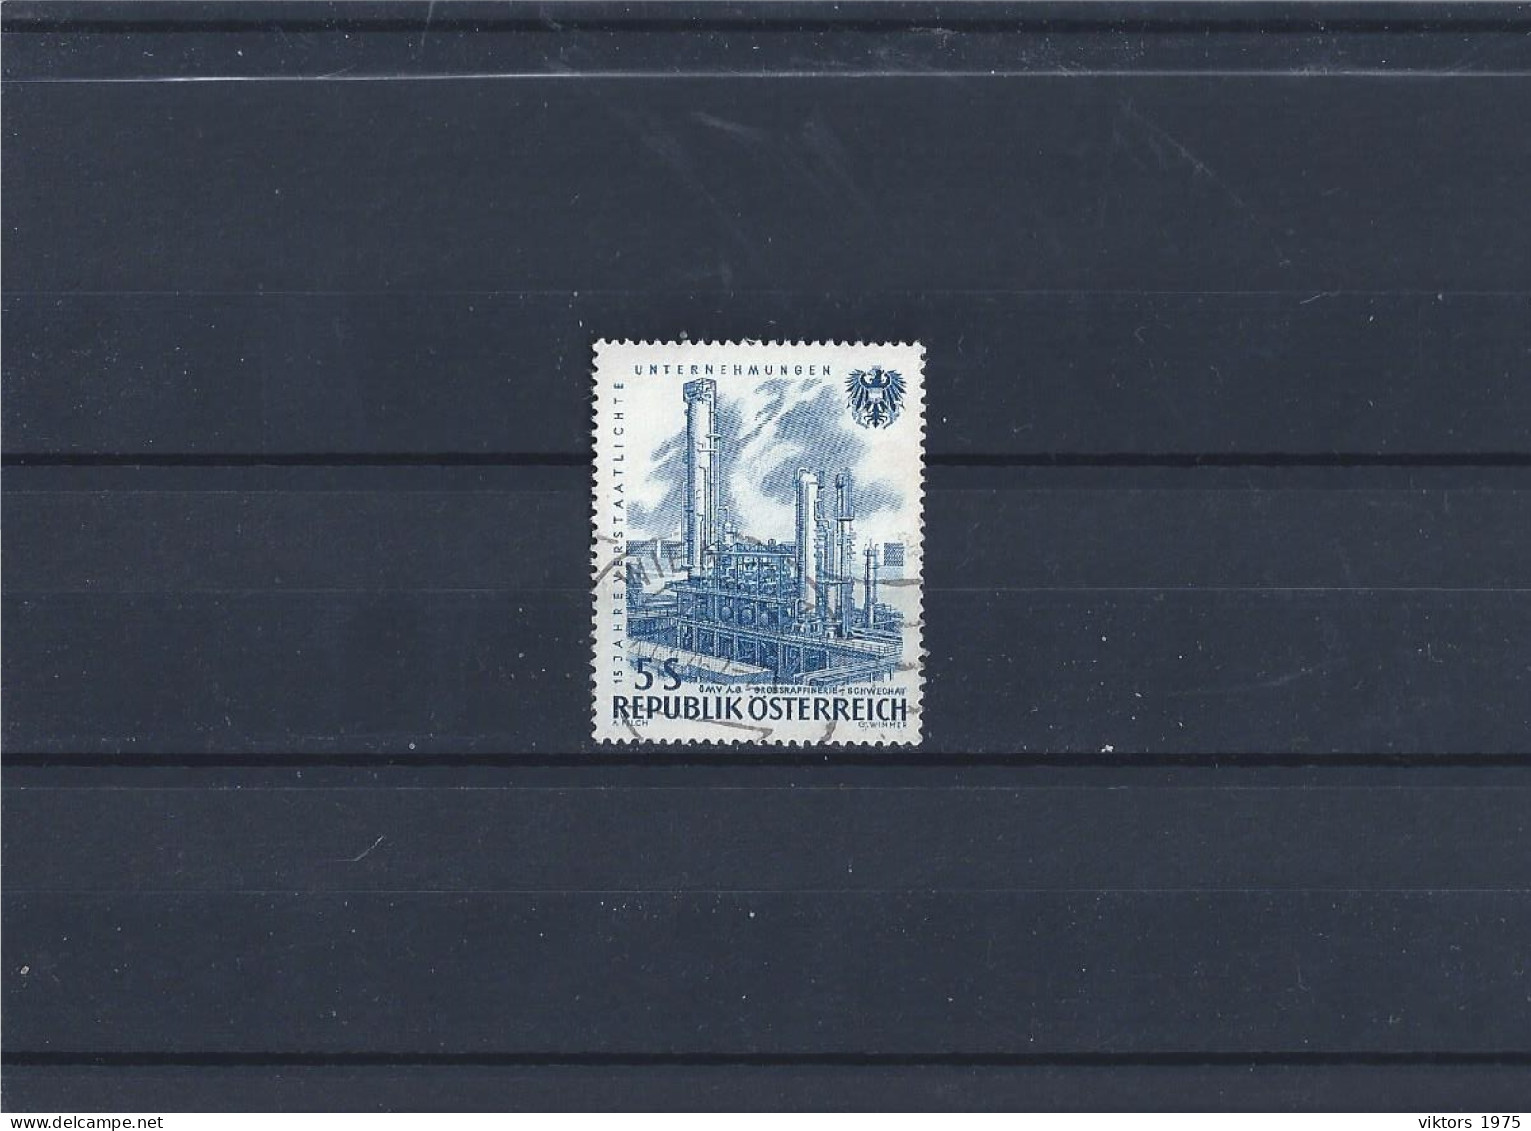 Used Stamp Nr.1096 In MICHEL Catalog - Gebraucht